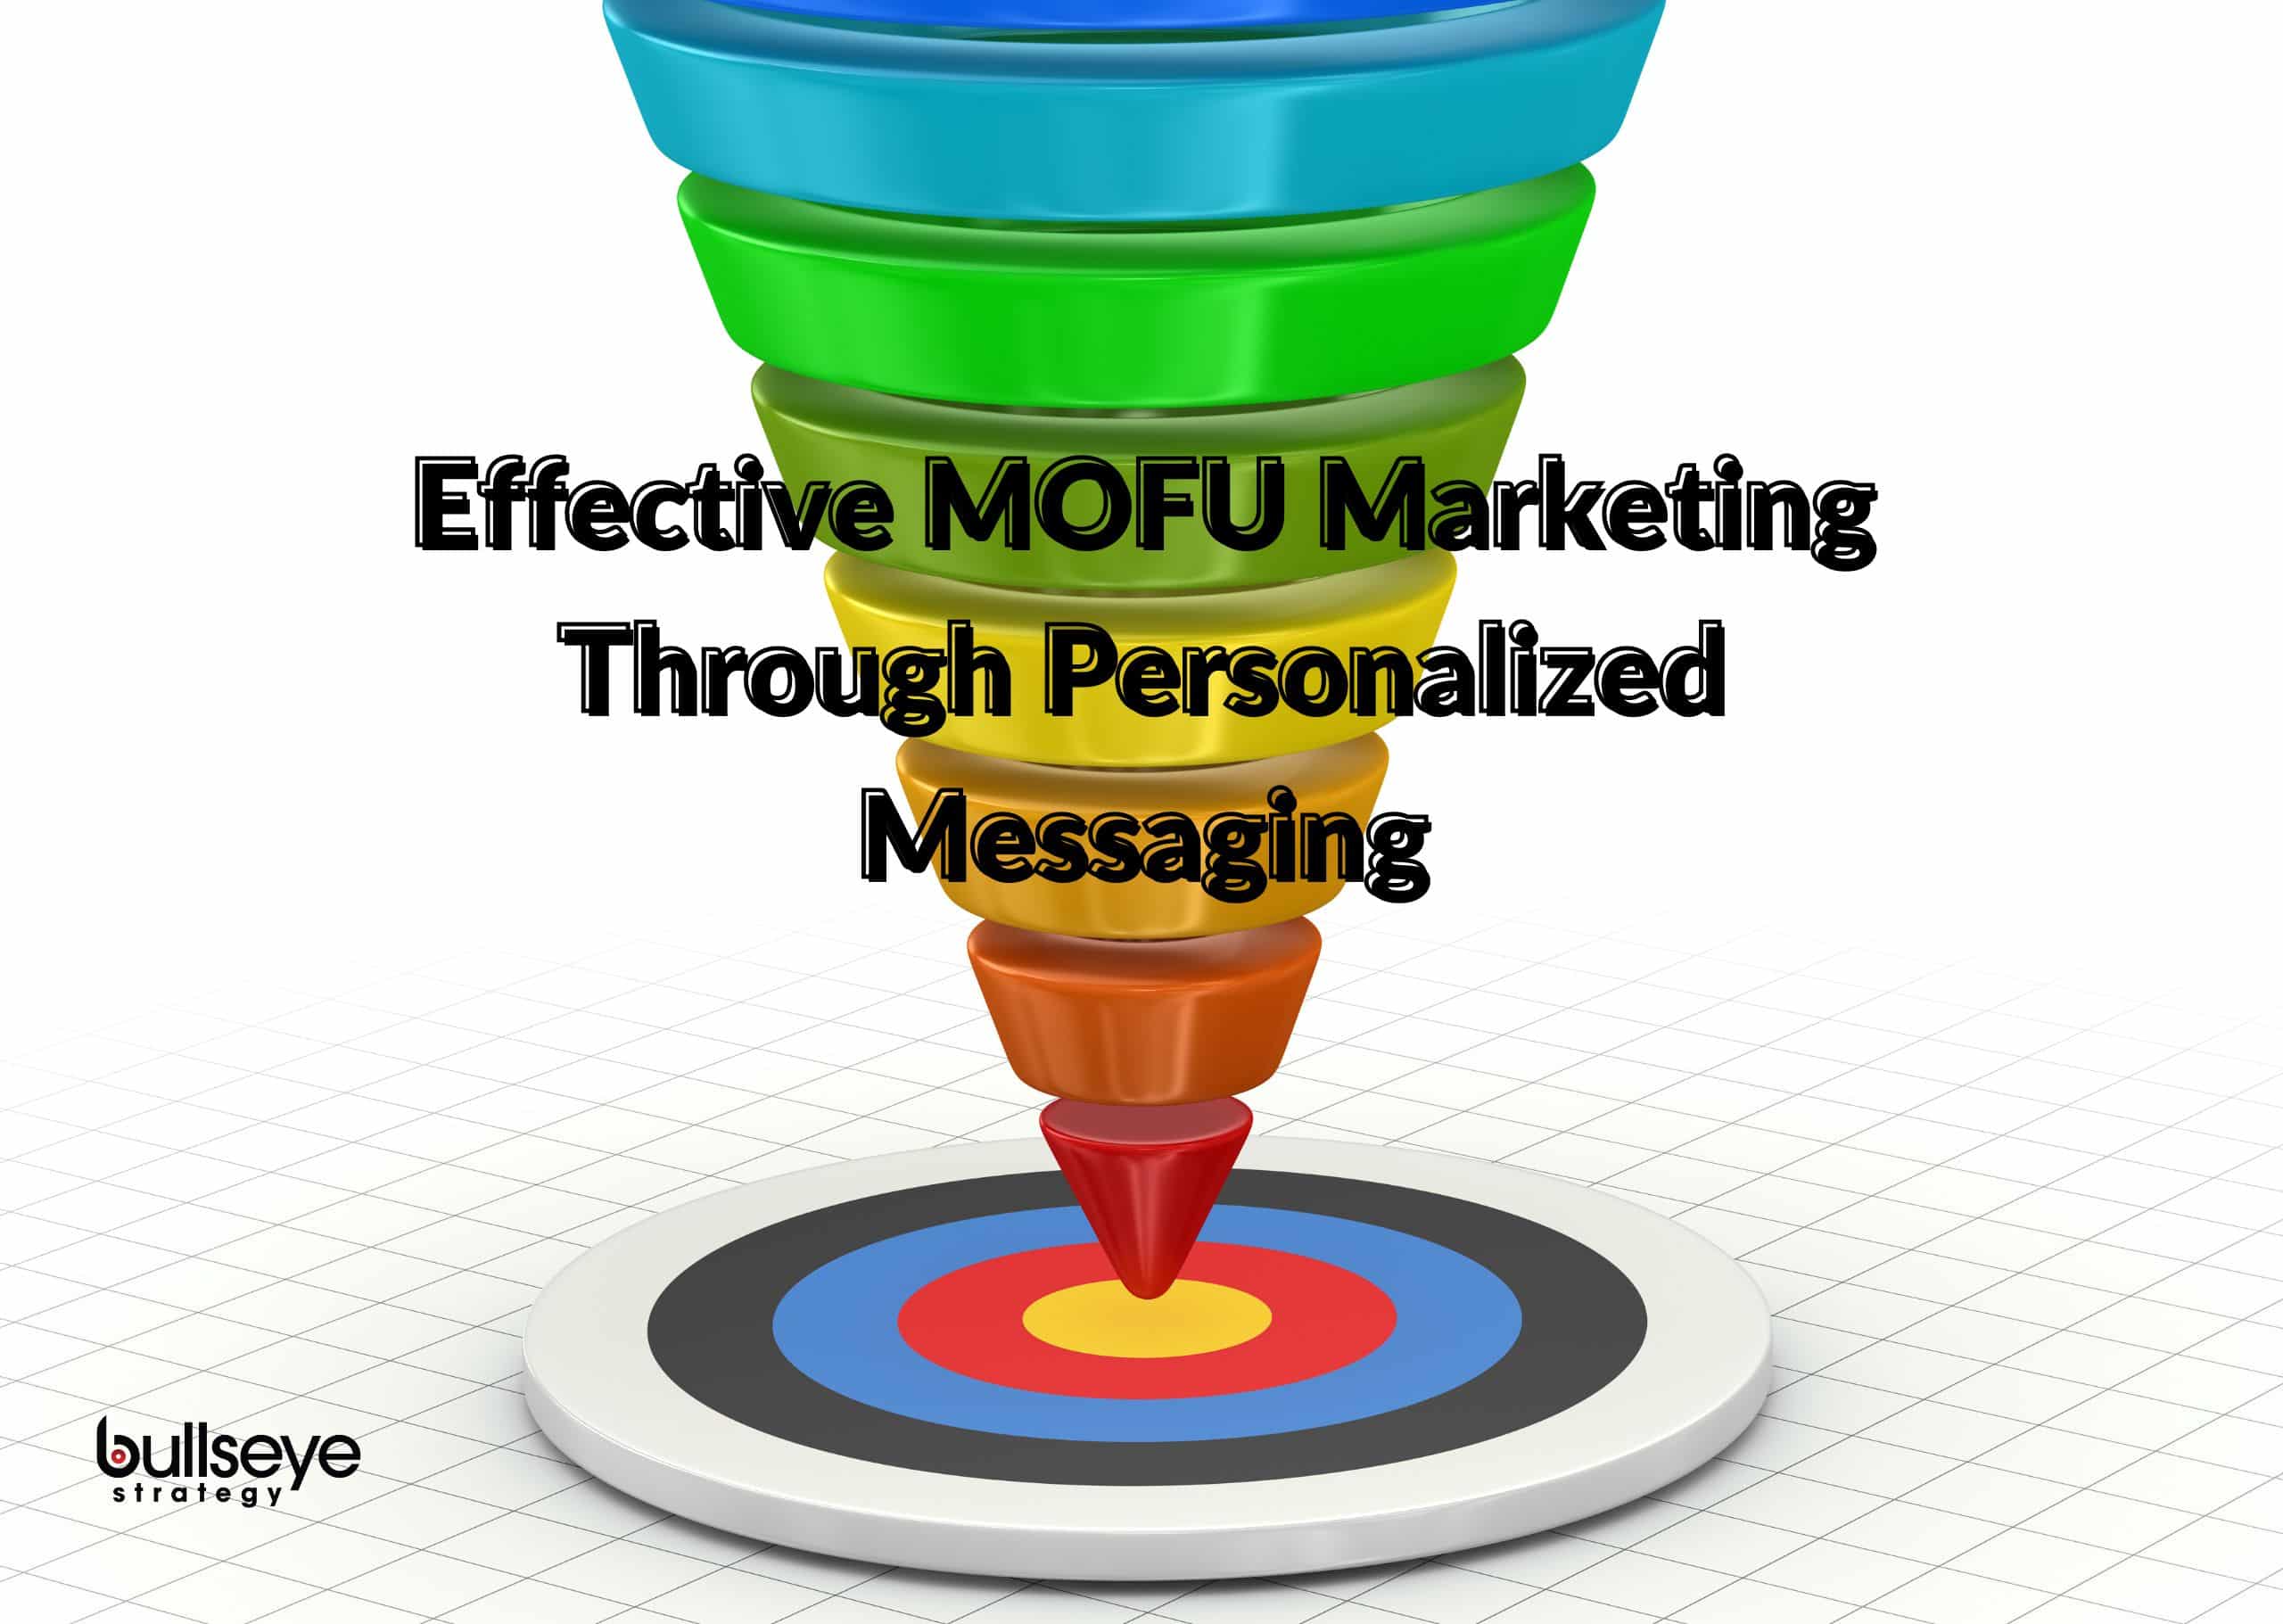 Effective MOFU marketing shown on a funnel hitting a bullseye.